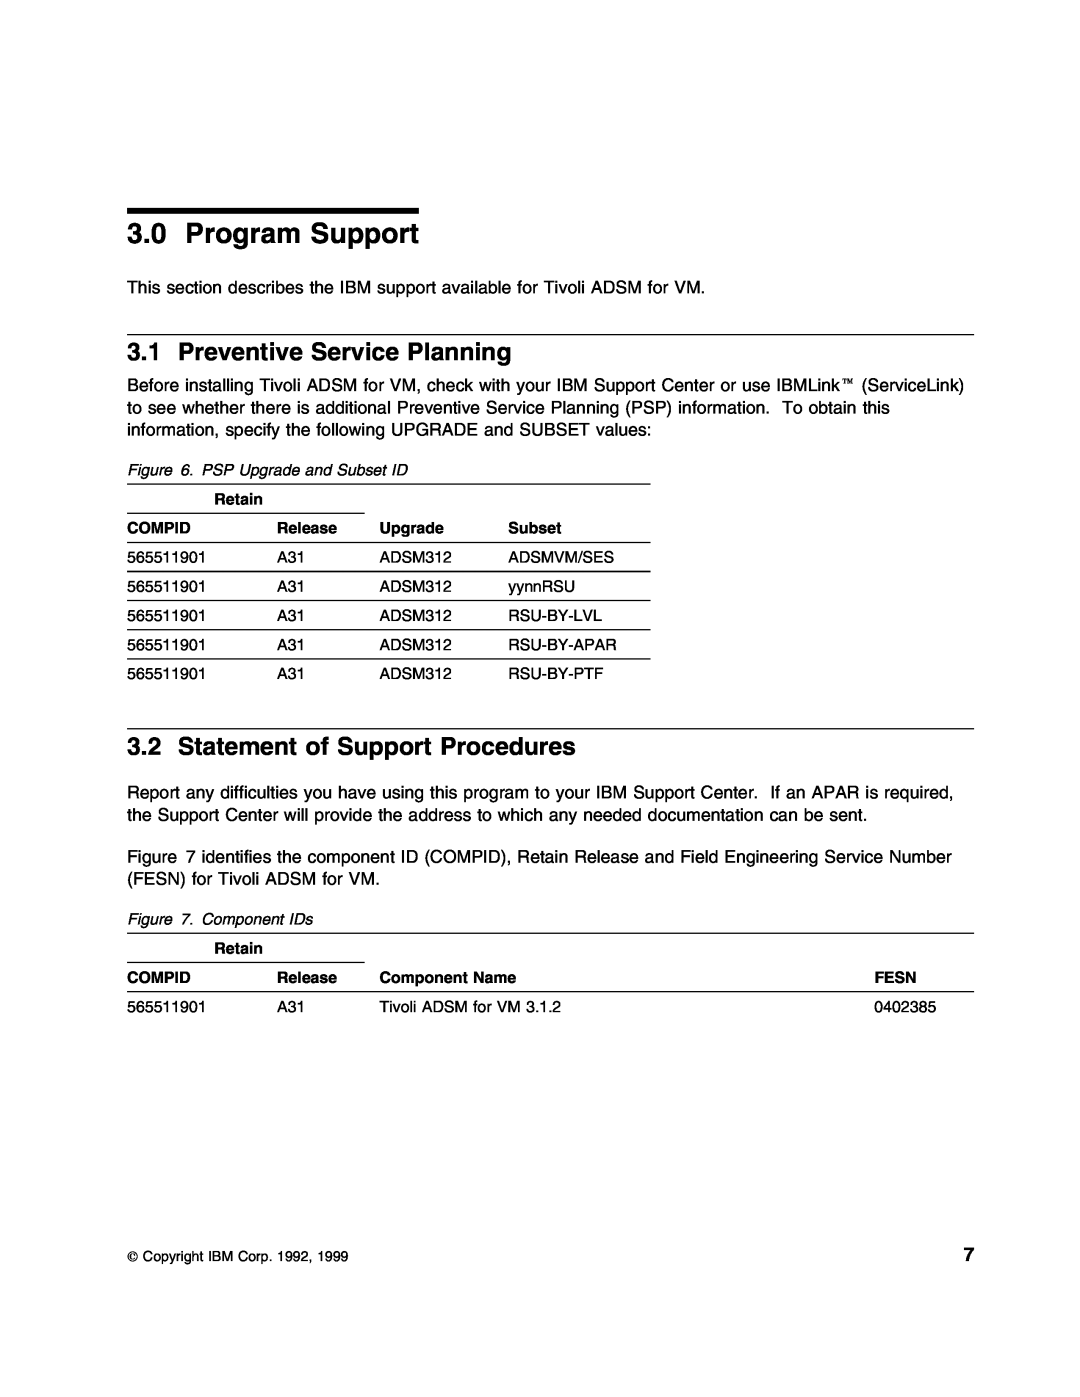 IBM 5697-VM3 manual Program Support, Preventive Service Planning, Statement of Support Procedures 